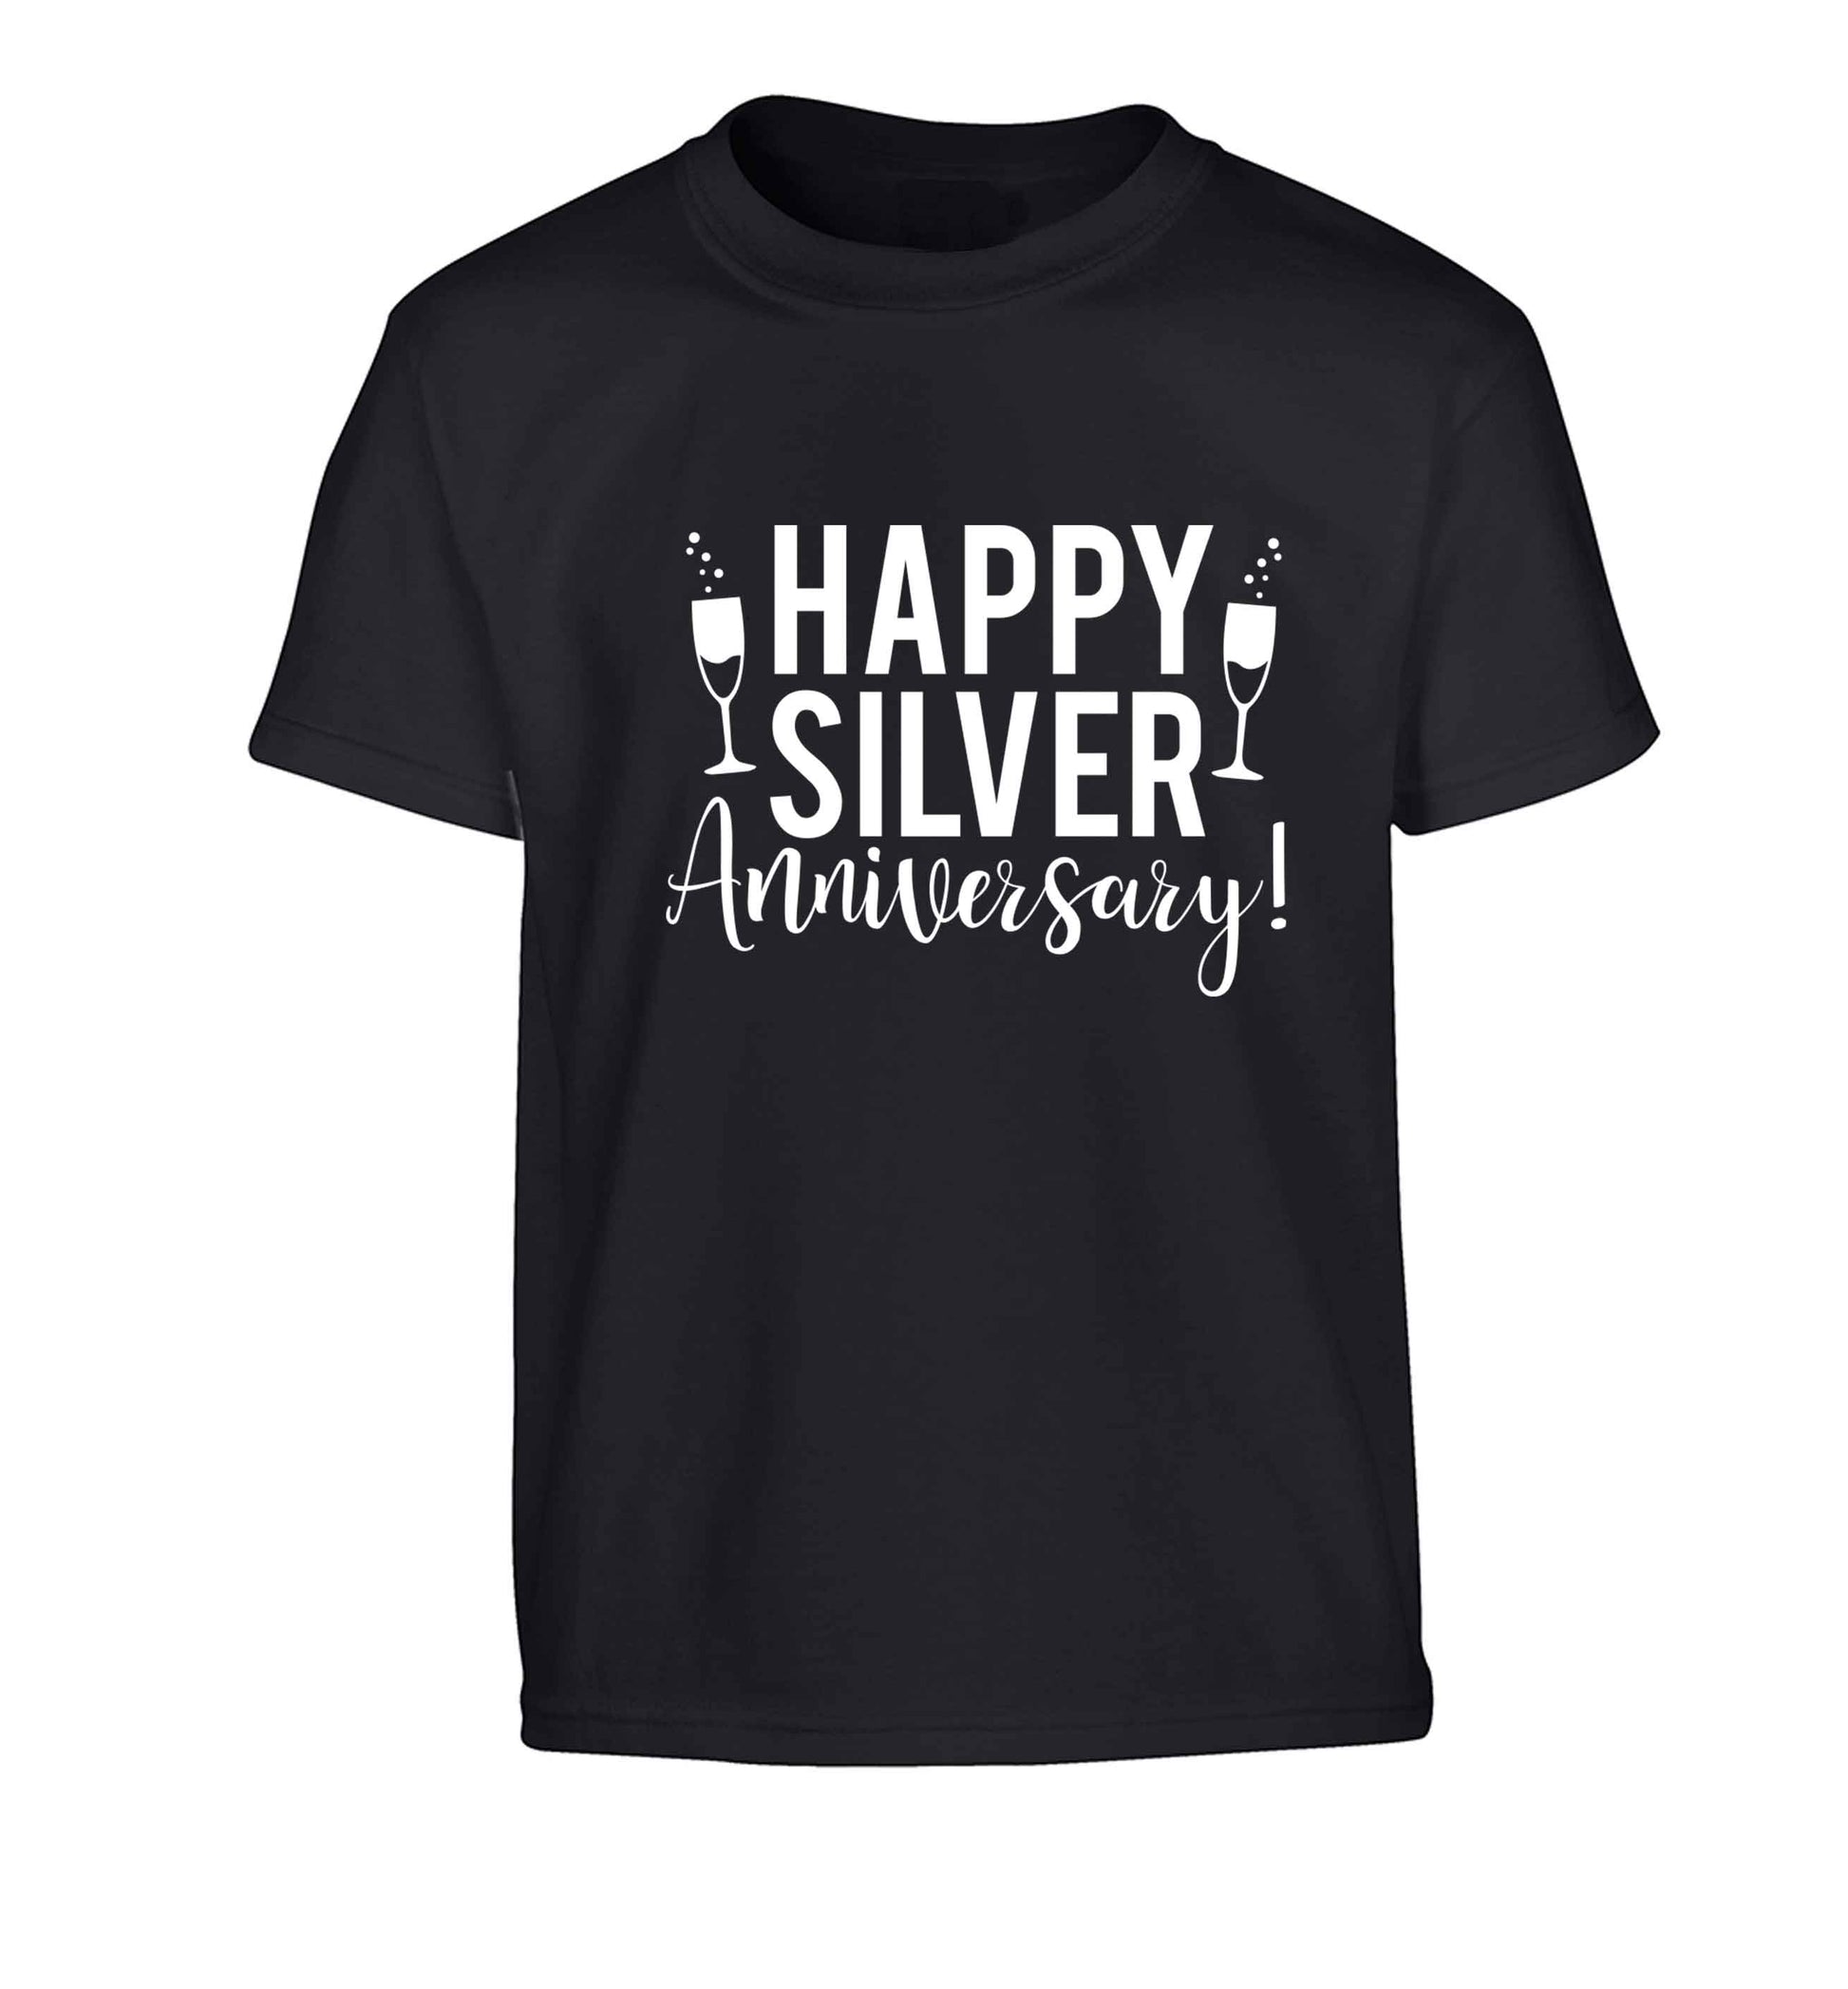 Happy silver anniversary! Children's black Tshirt 12-13 Years